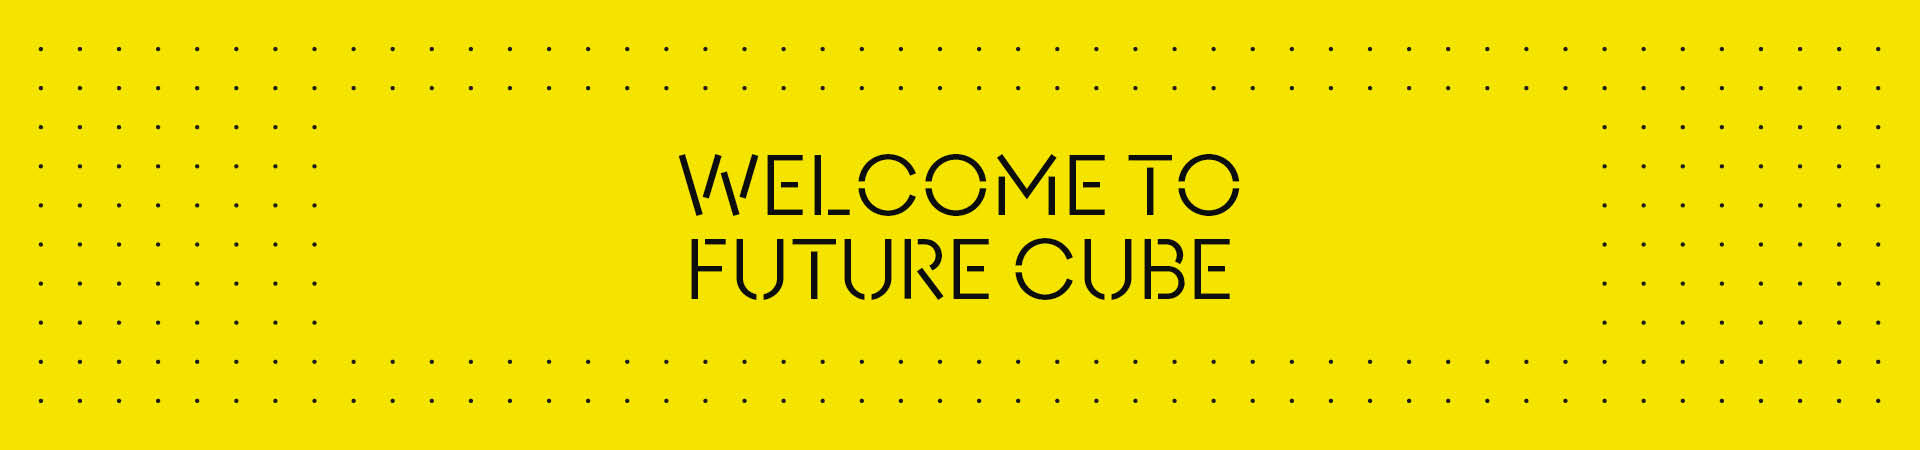 MTC Future Cube Website Banners